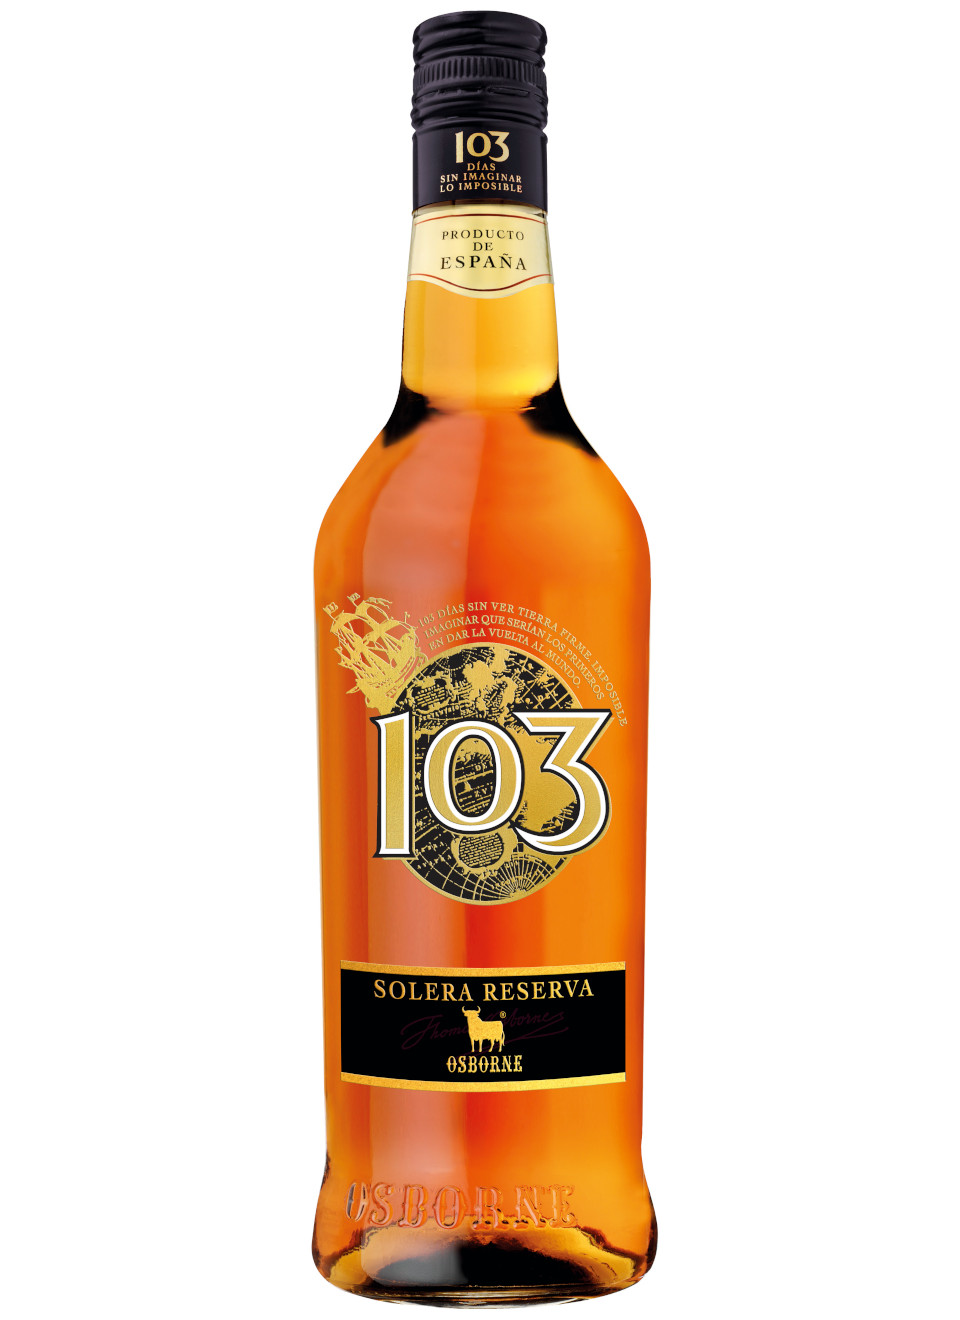  Osborne 103 Etiqueta Negra Brandy Flasche 1 x 0,7 l 